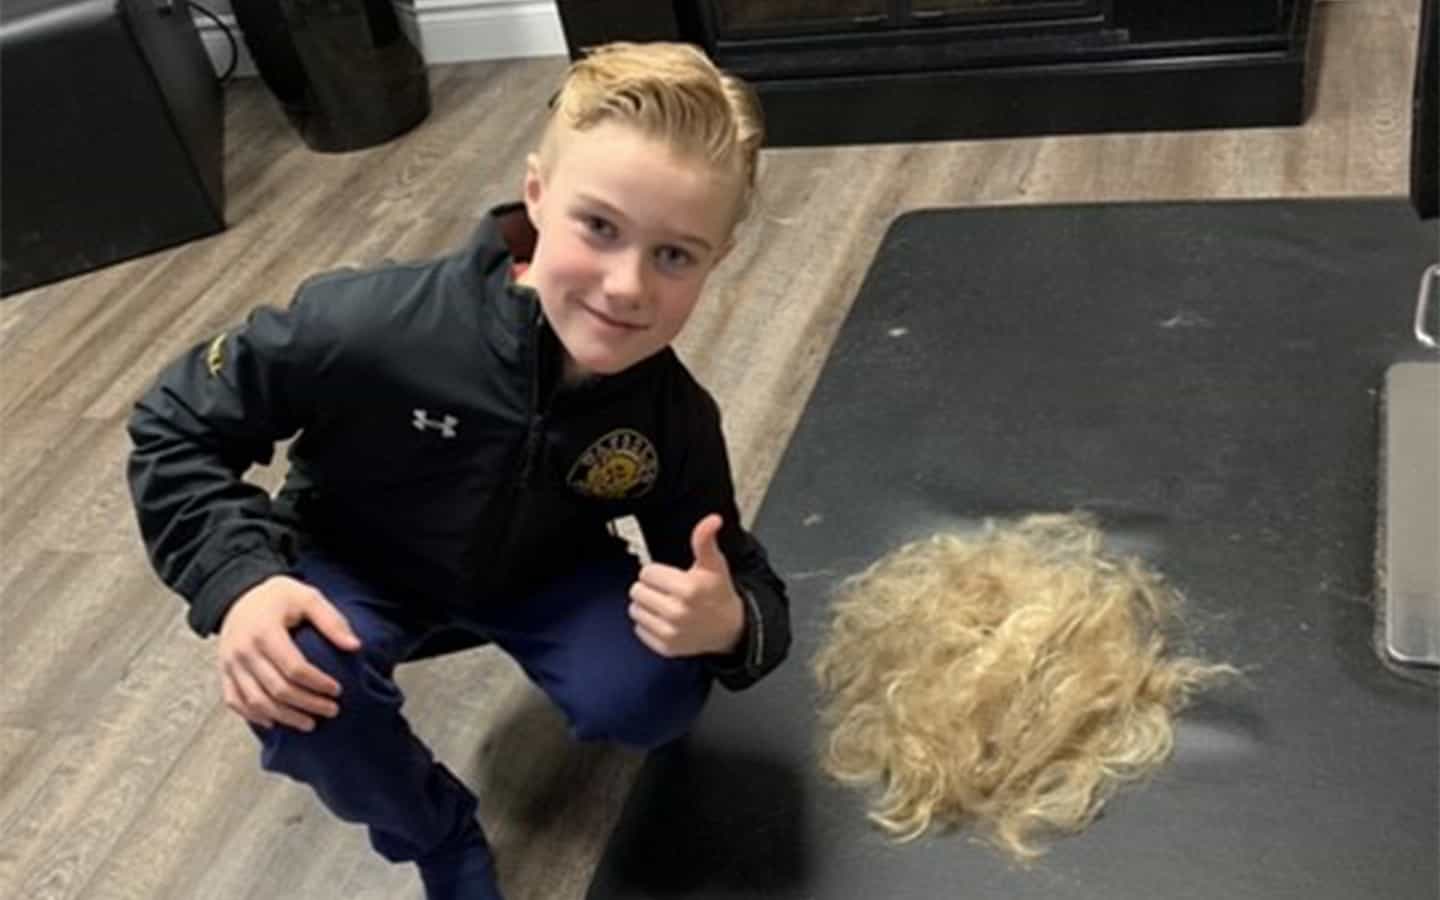                      Elmira boy’s haircut raises money for three local families dealing with cancer                             
                     